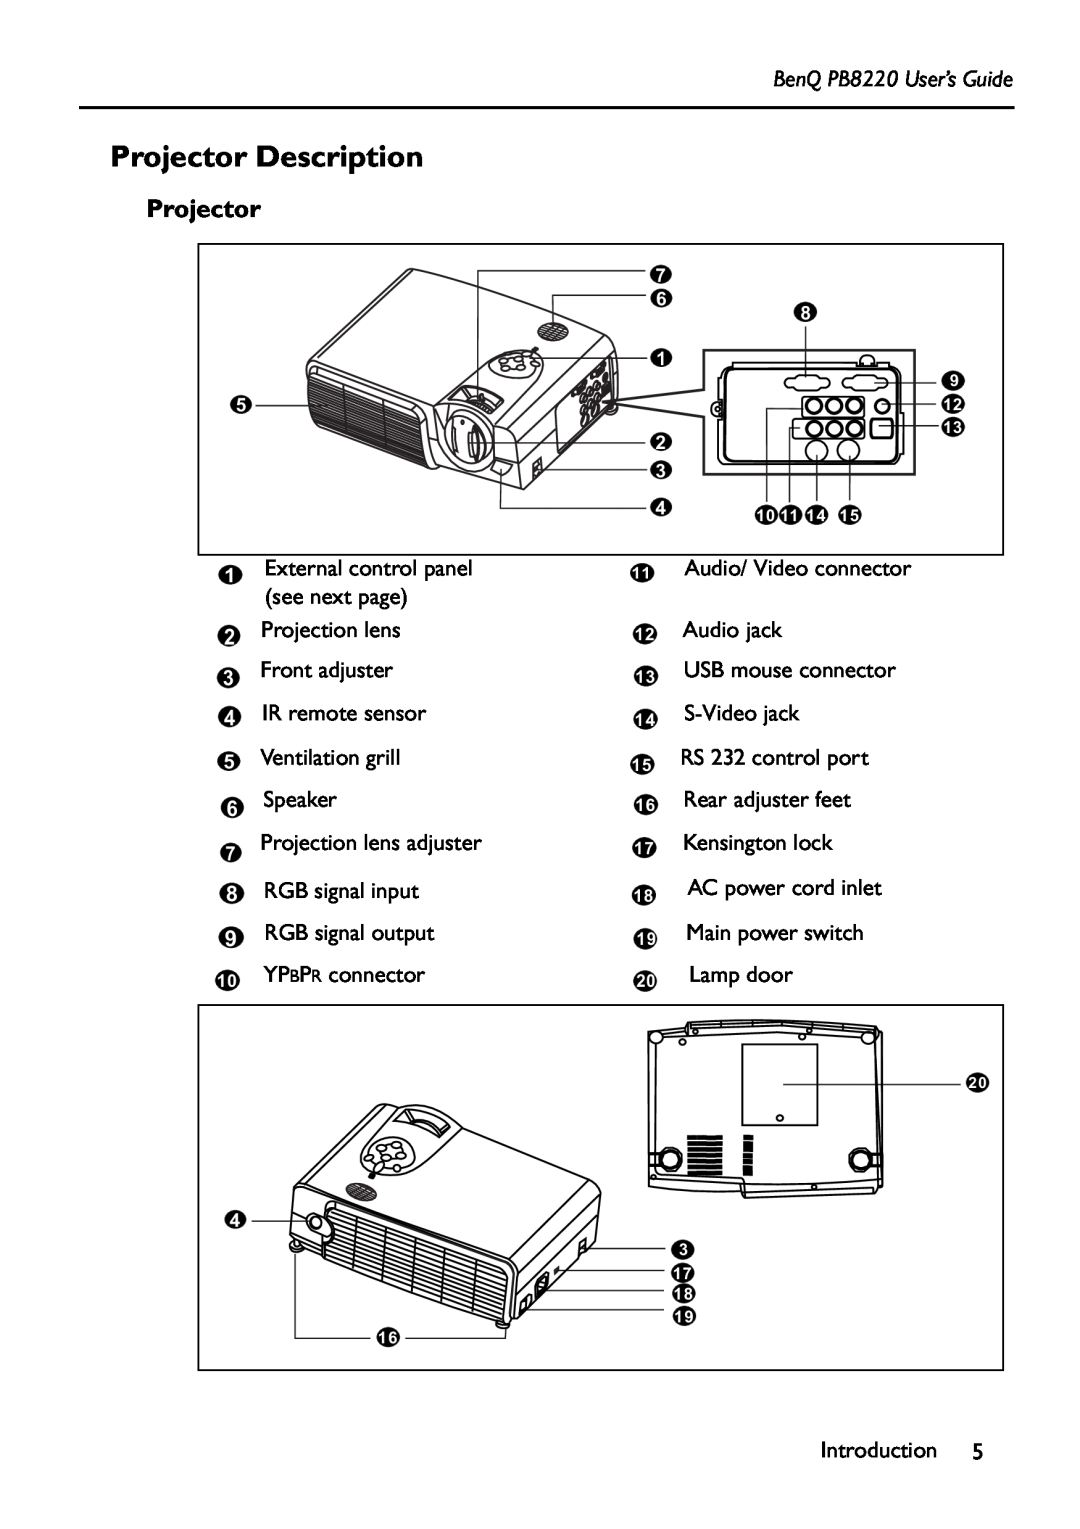 Acer manual Projector Description, BenQ PB8220 User’s Guide, Introduction 